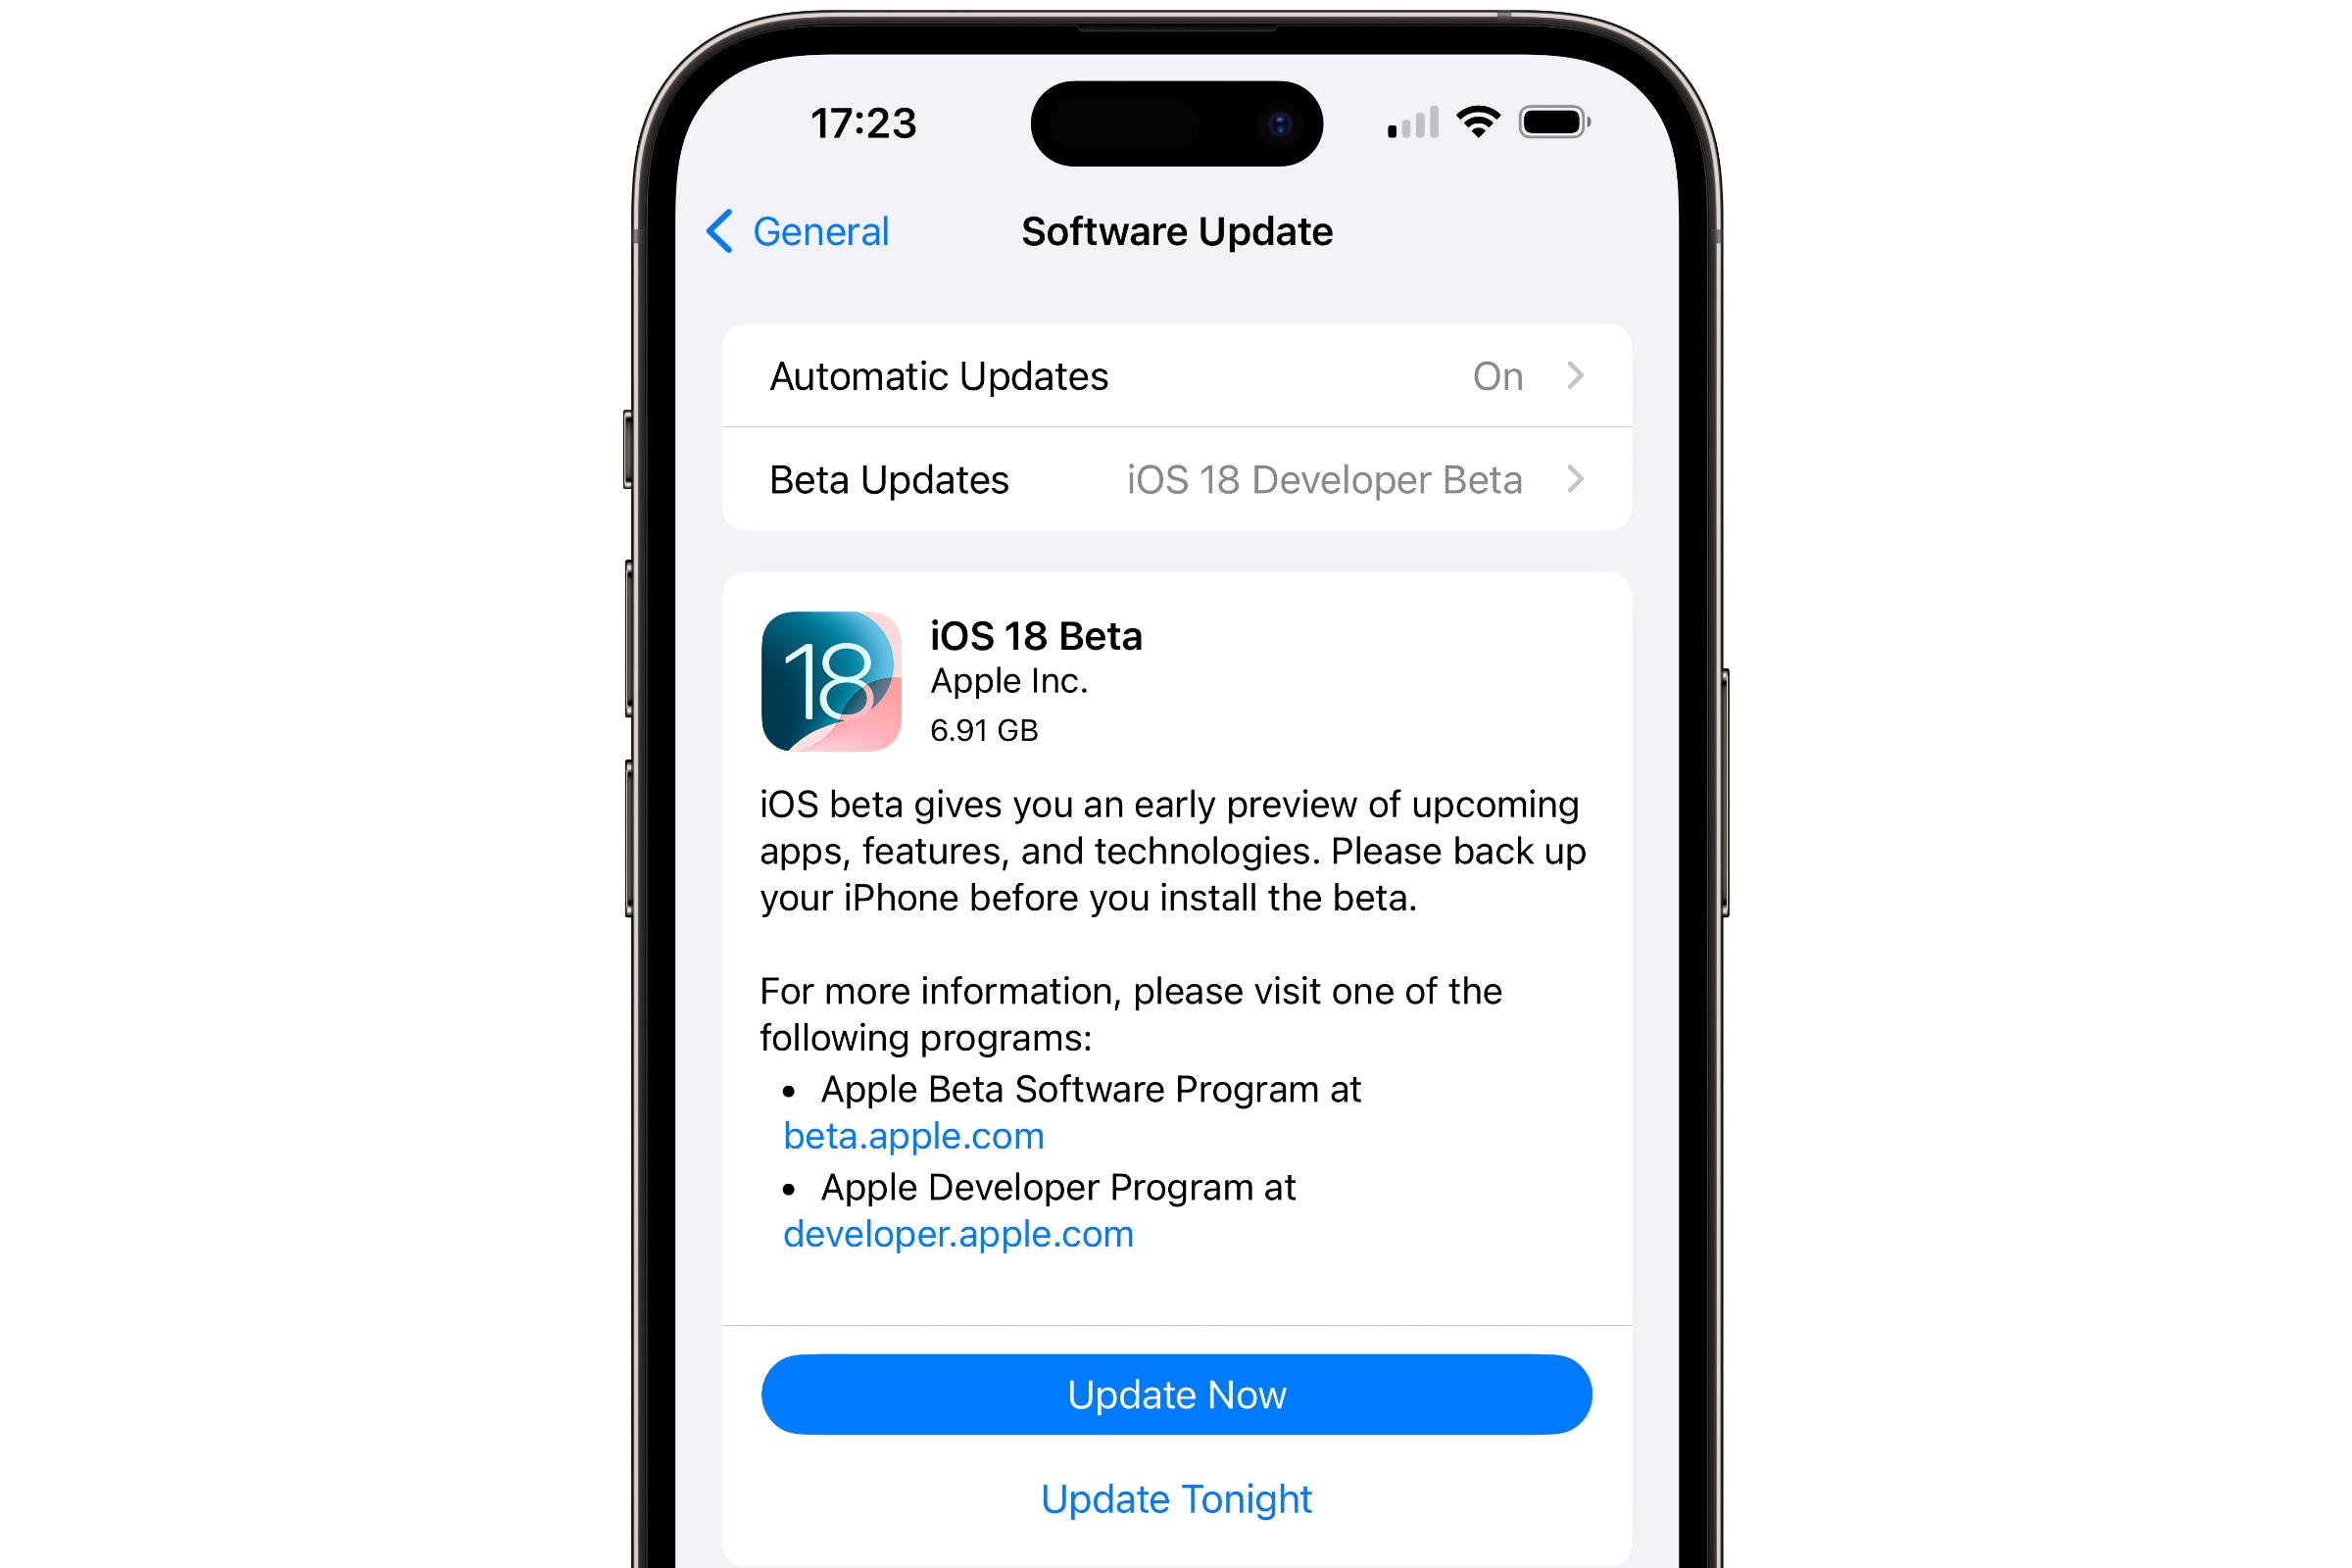 iPhone showing iOS 18 Developer Beta Software Update.